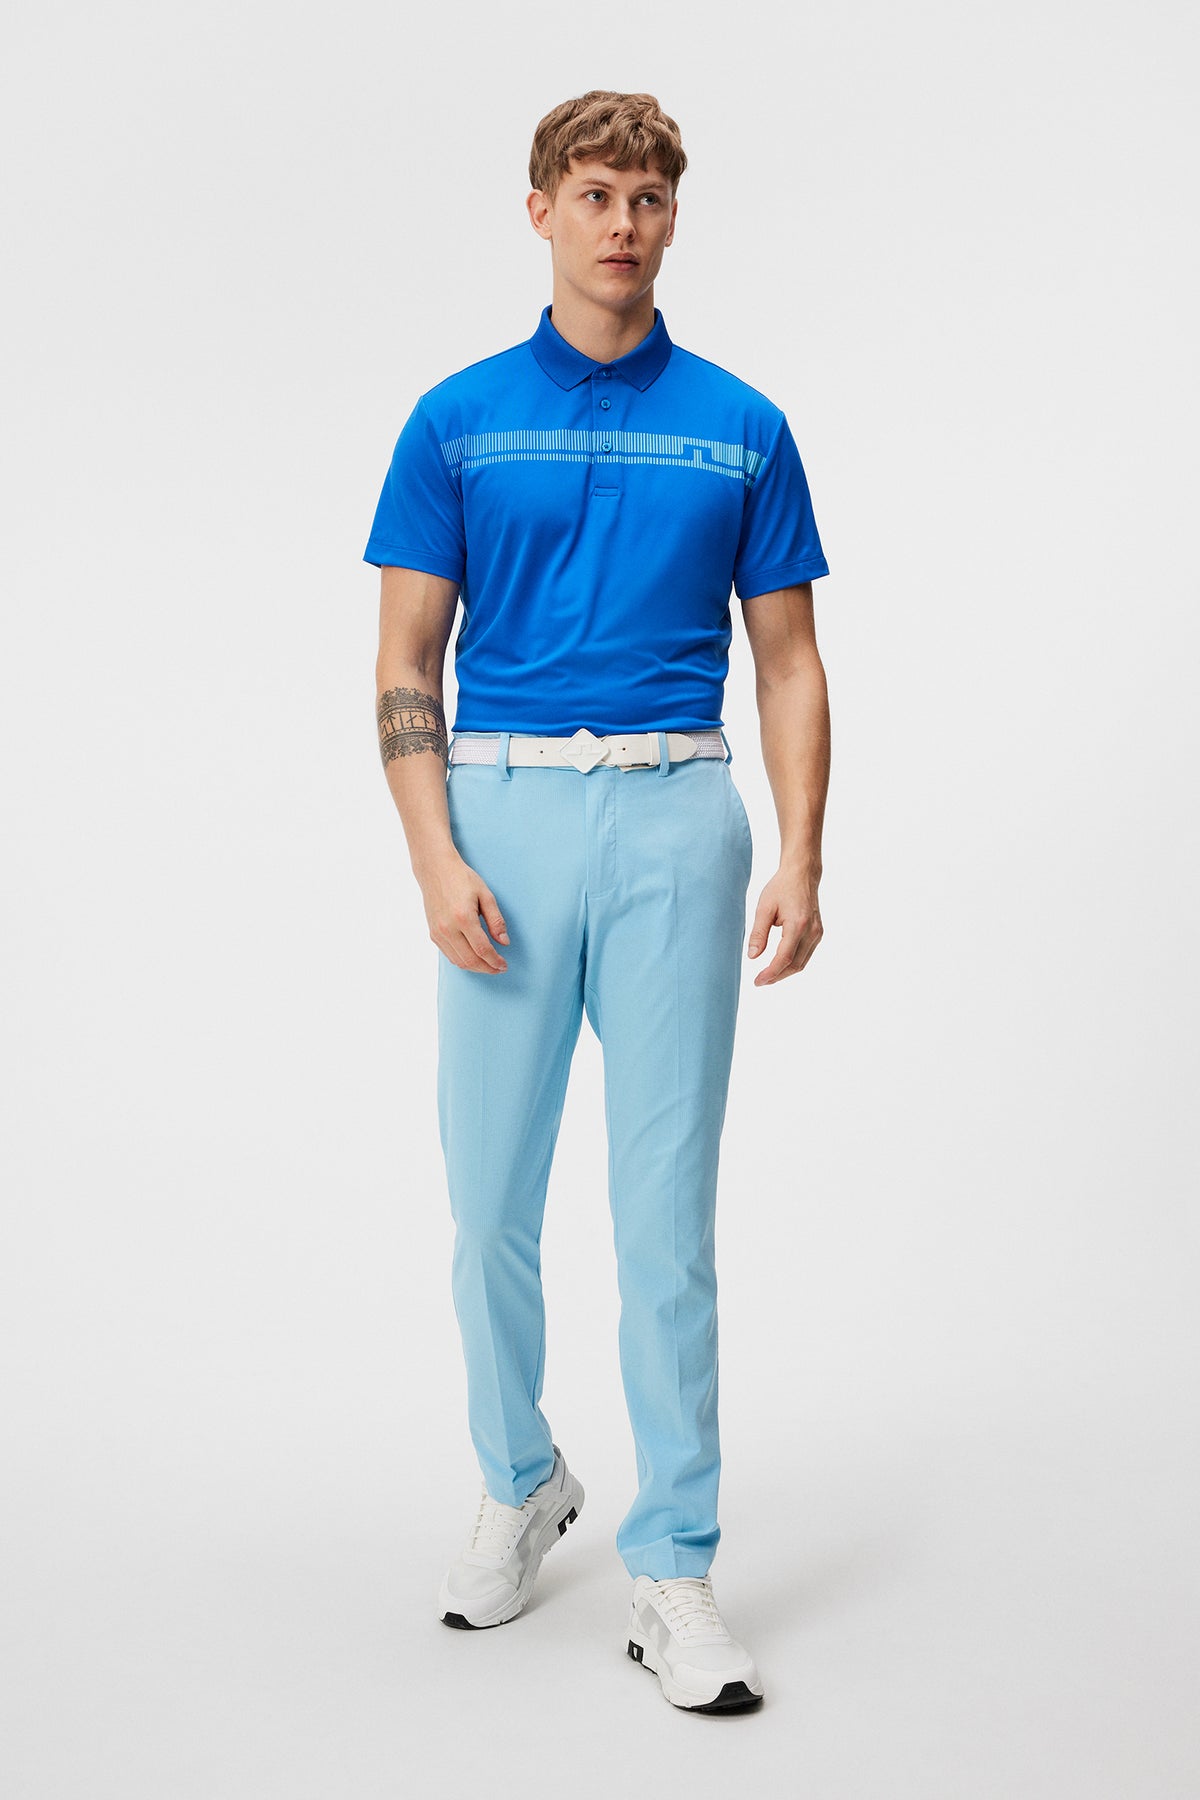 Klas Regular Fit Golf Polo / Nautical Blue